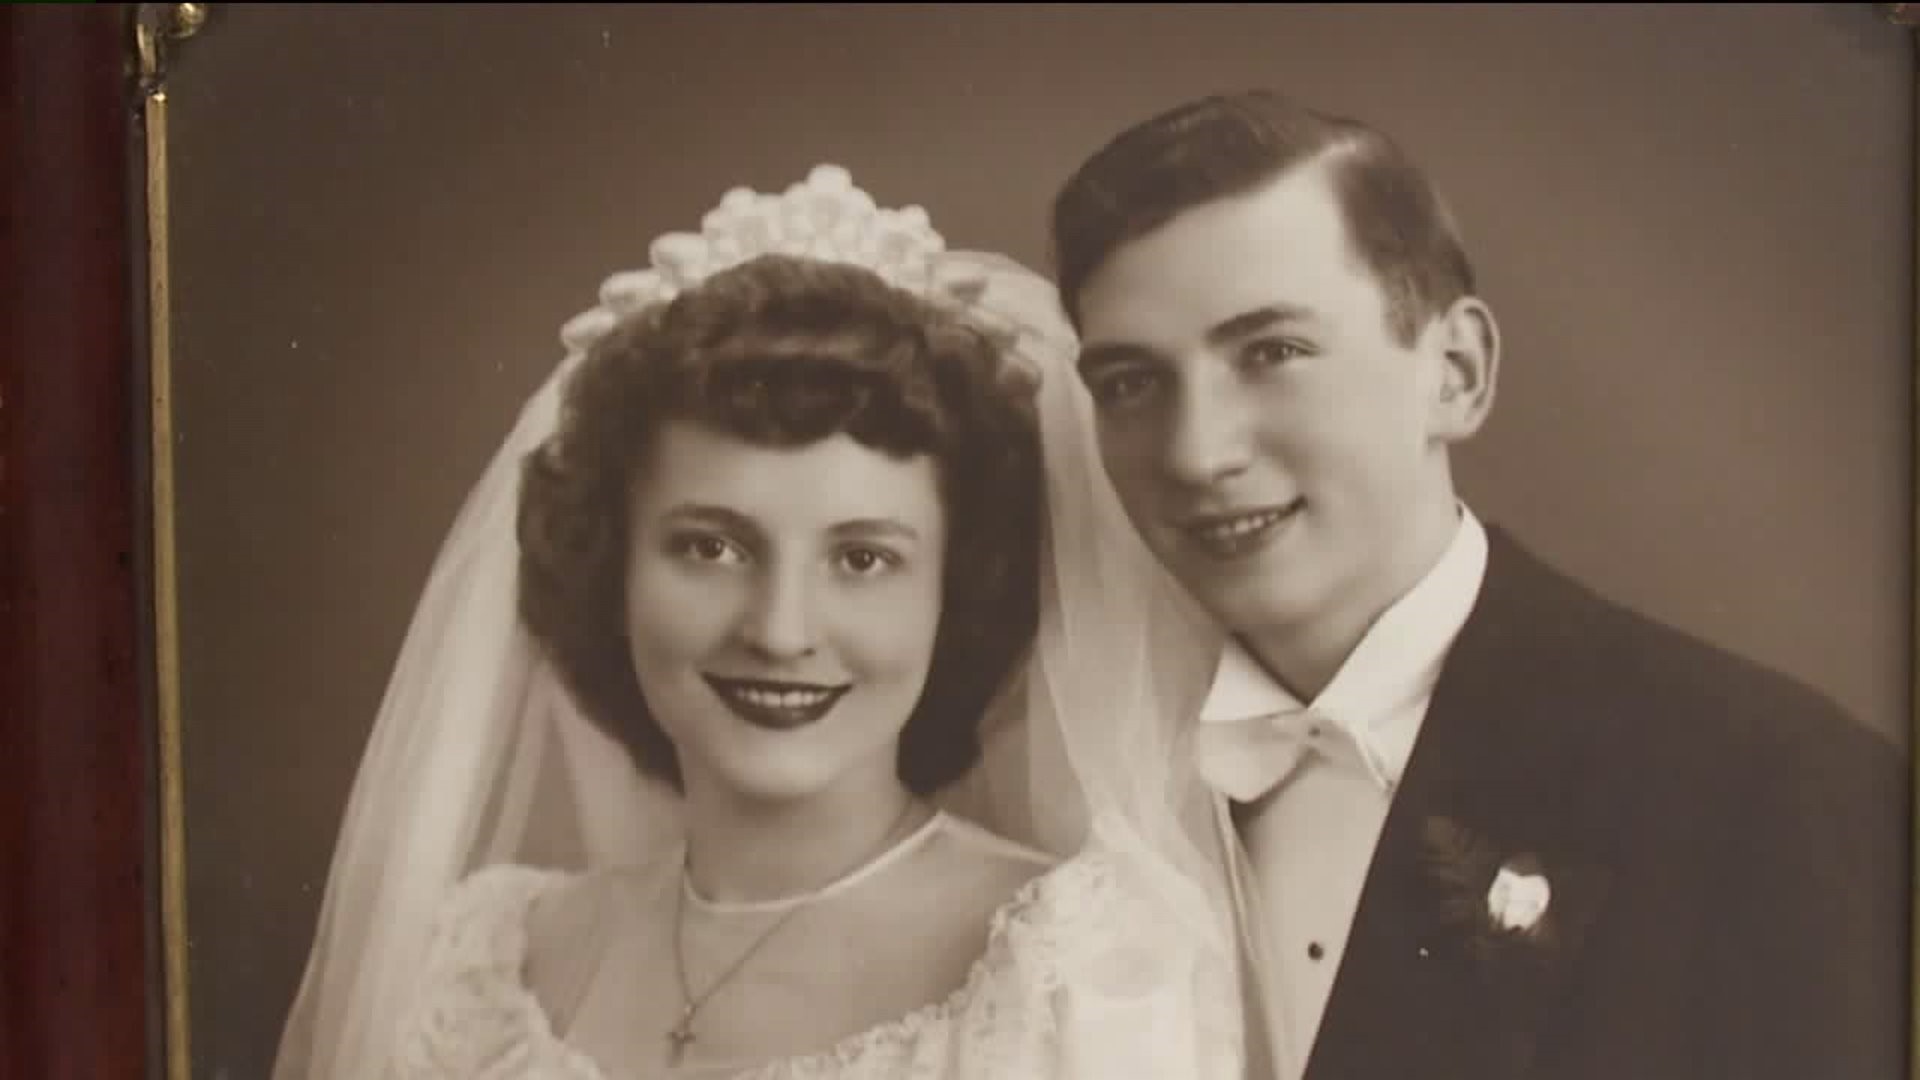 Couple Celebrates 70th Wedding Anniversary